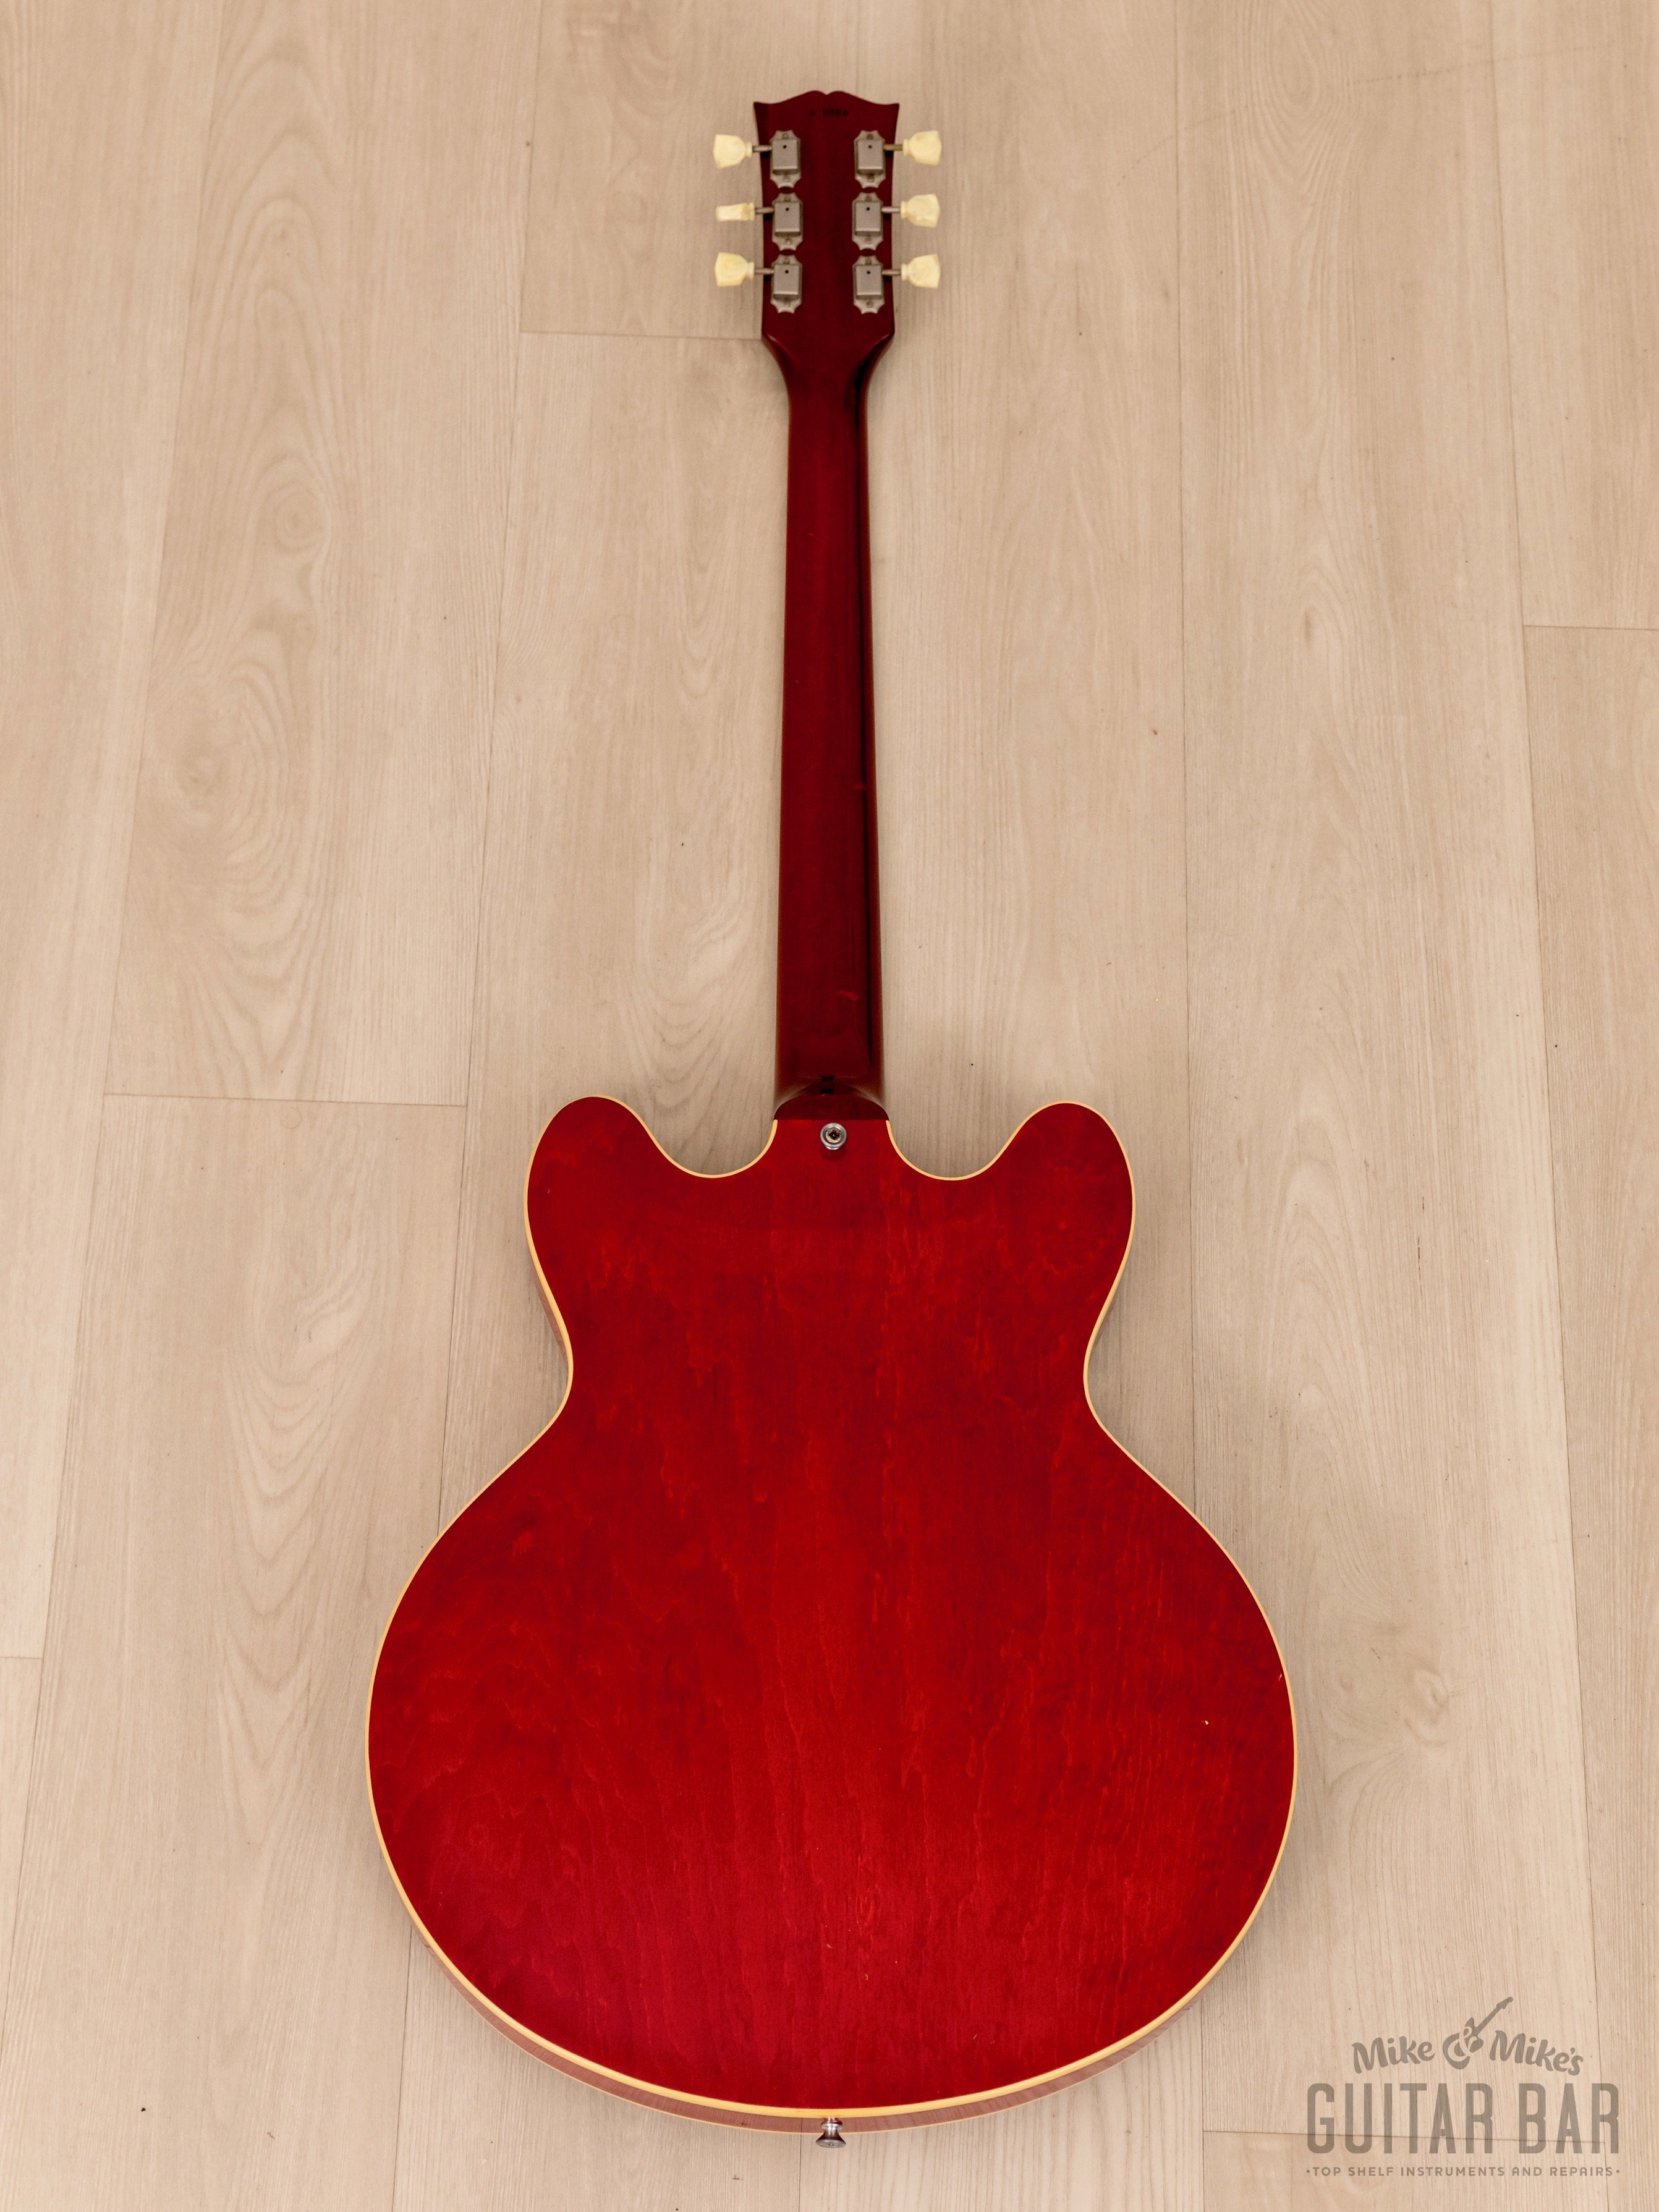 1990 Greco SA-75 Vintage Semi-Hollow Guitar 335 Cherry Mint Collection, Japan Fujigen